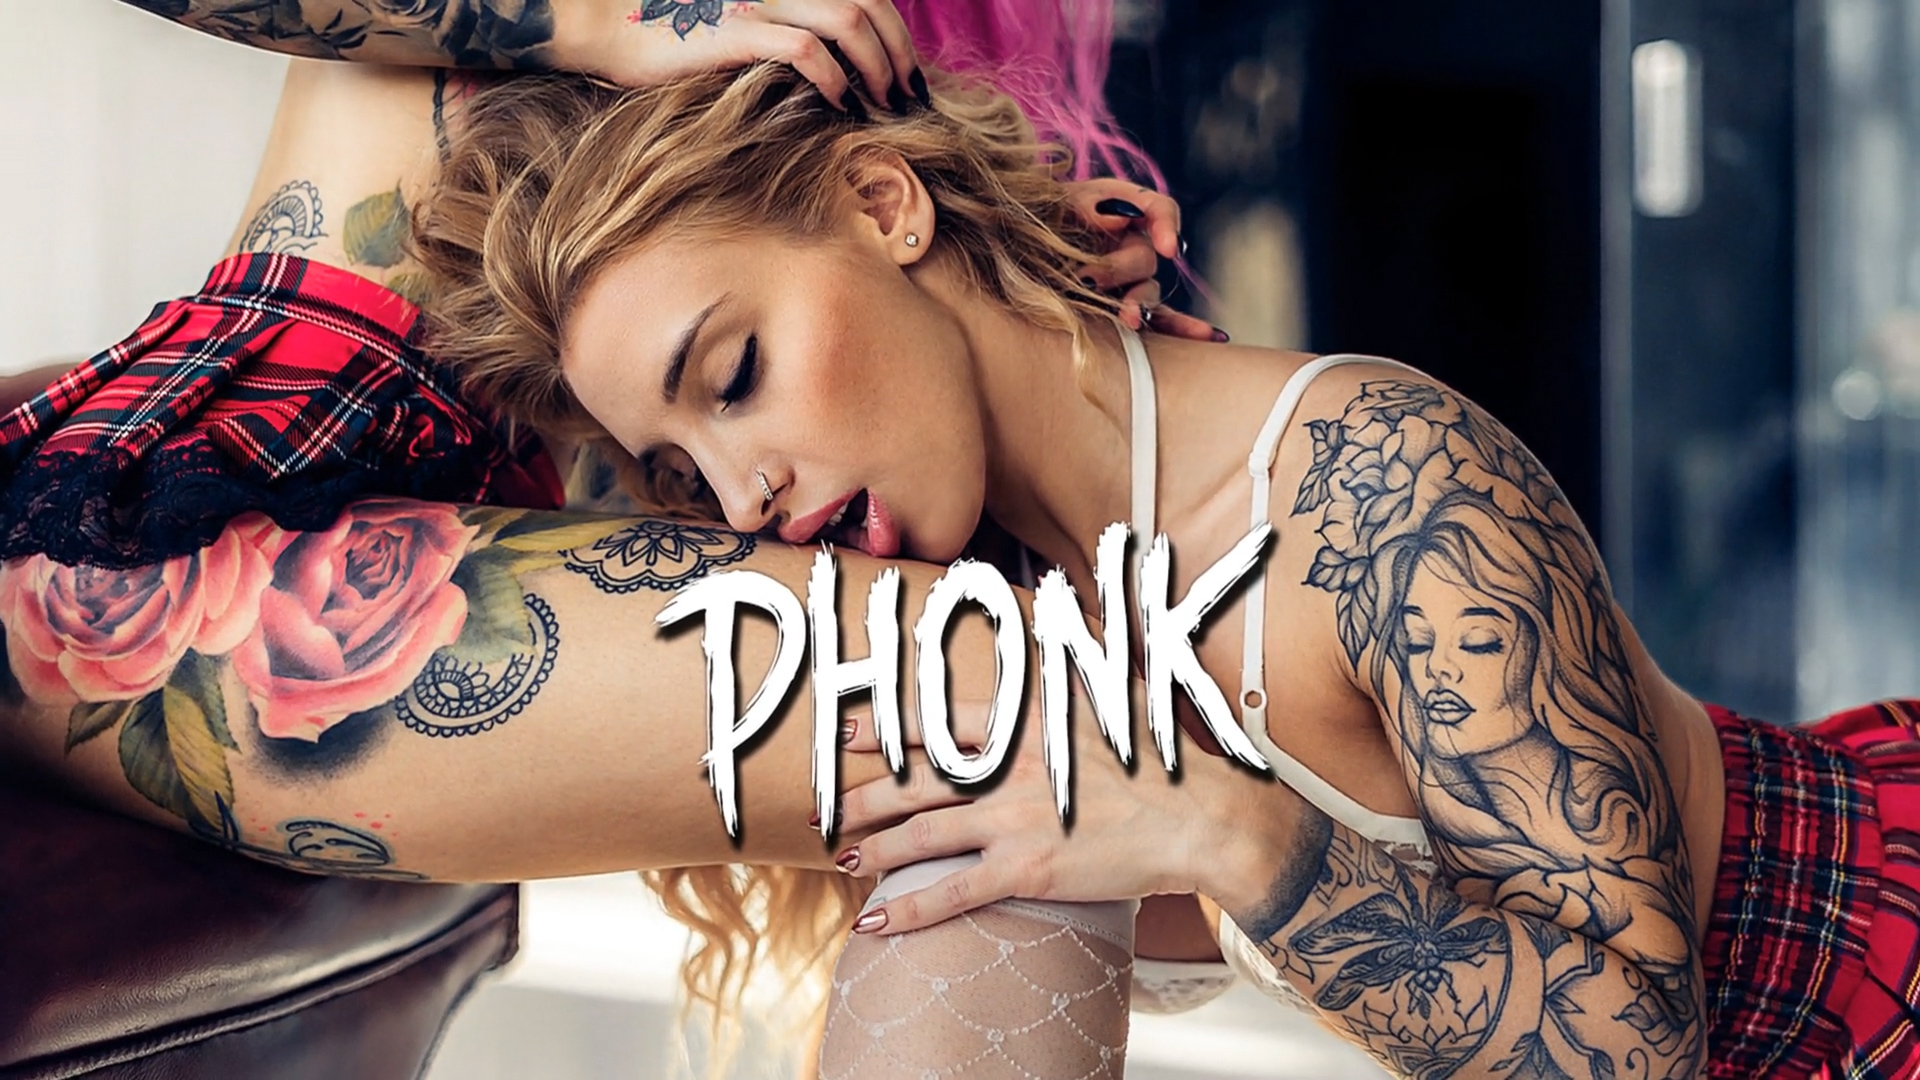 c152 - Phonkstorm 「 PHONK 」 Музыка без АП | Copyright Free | Royalty Free Music